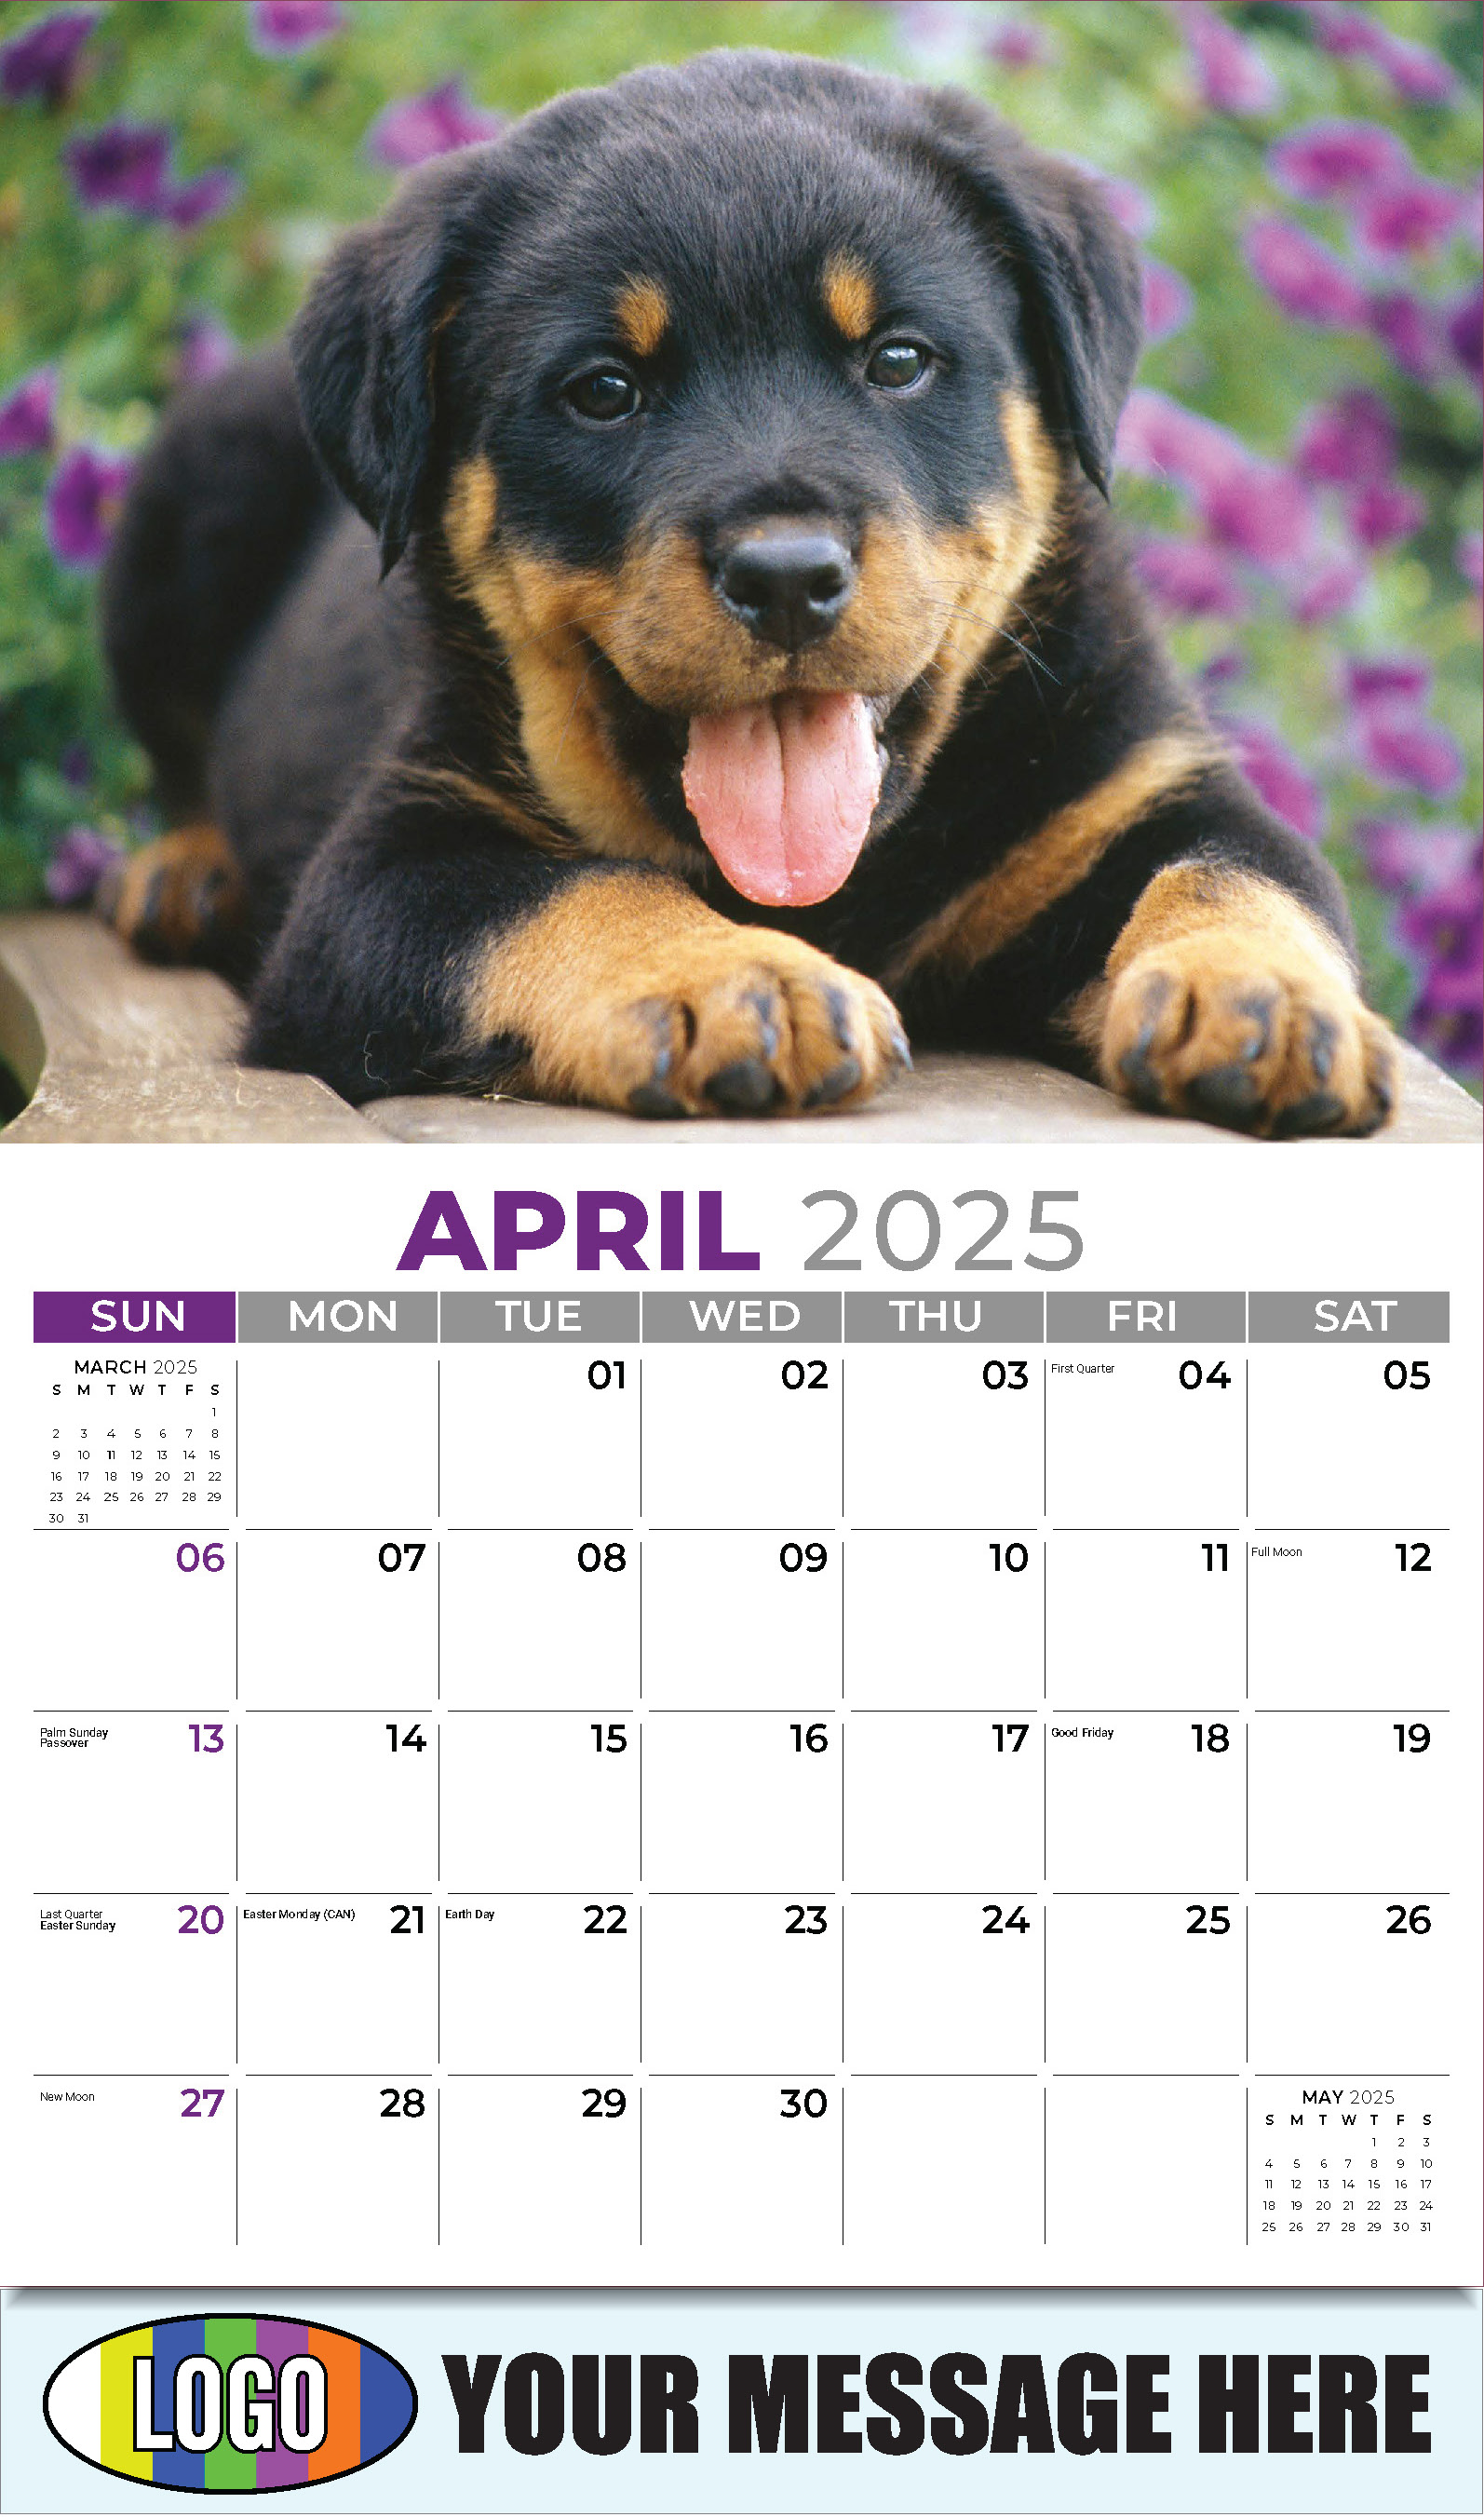 Pets 2025 Business Advertising Wall Calendar - April